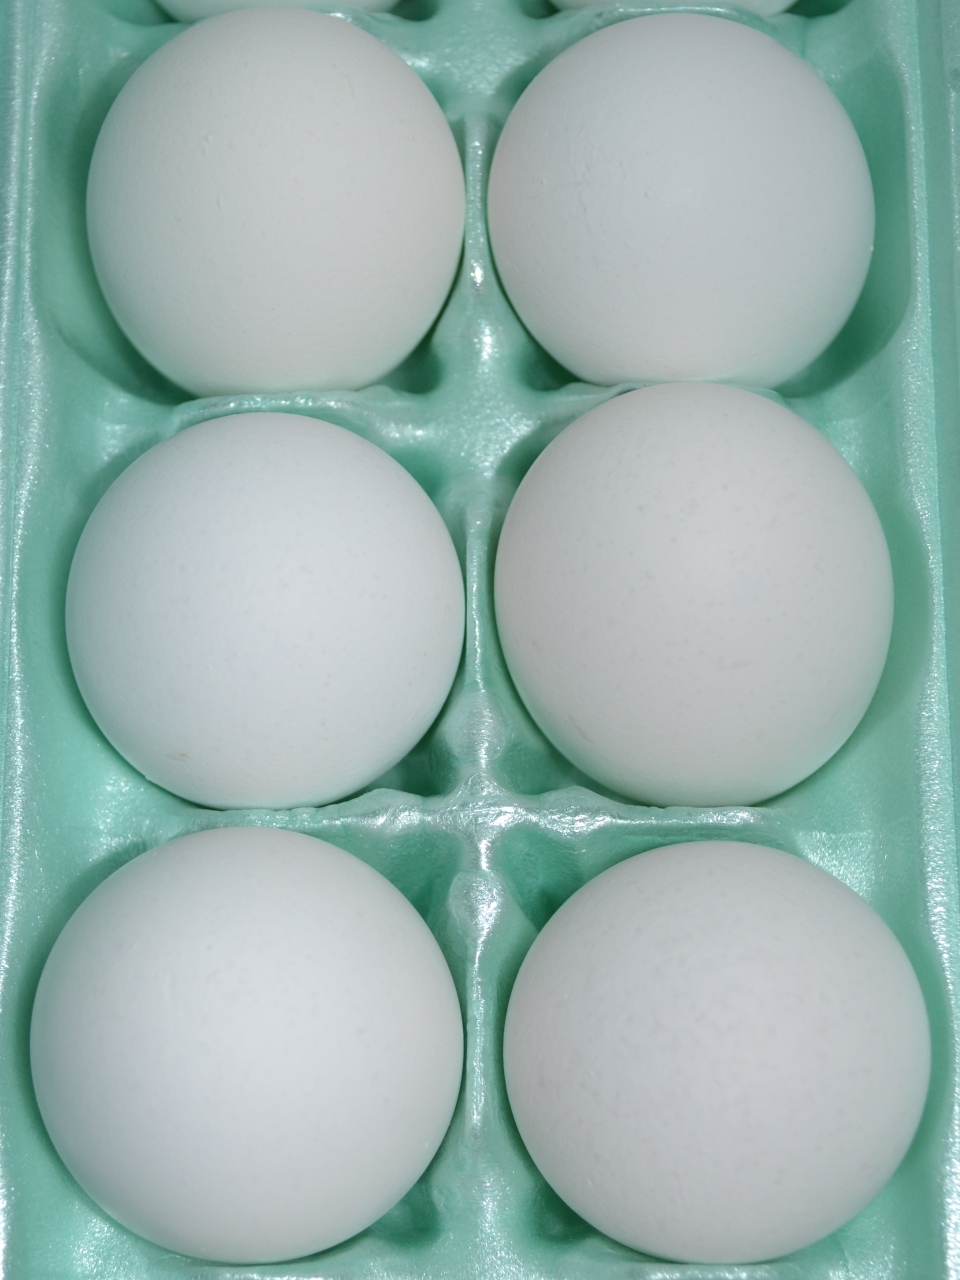 Half a Dozen Eggs, Chicken, Eggs, Package, Six, HQ Photo